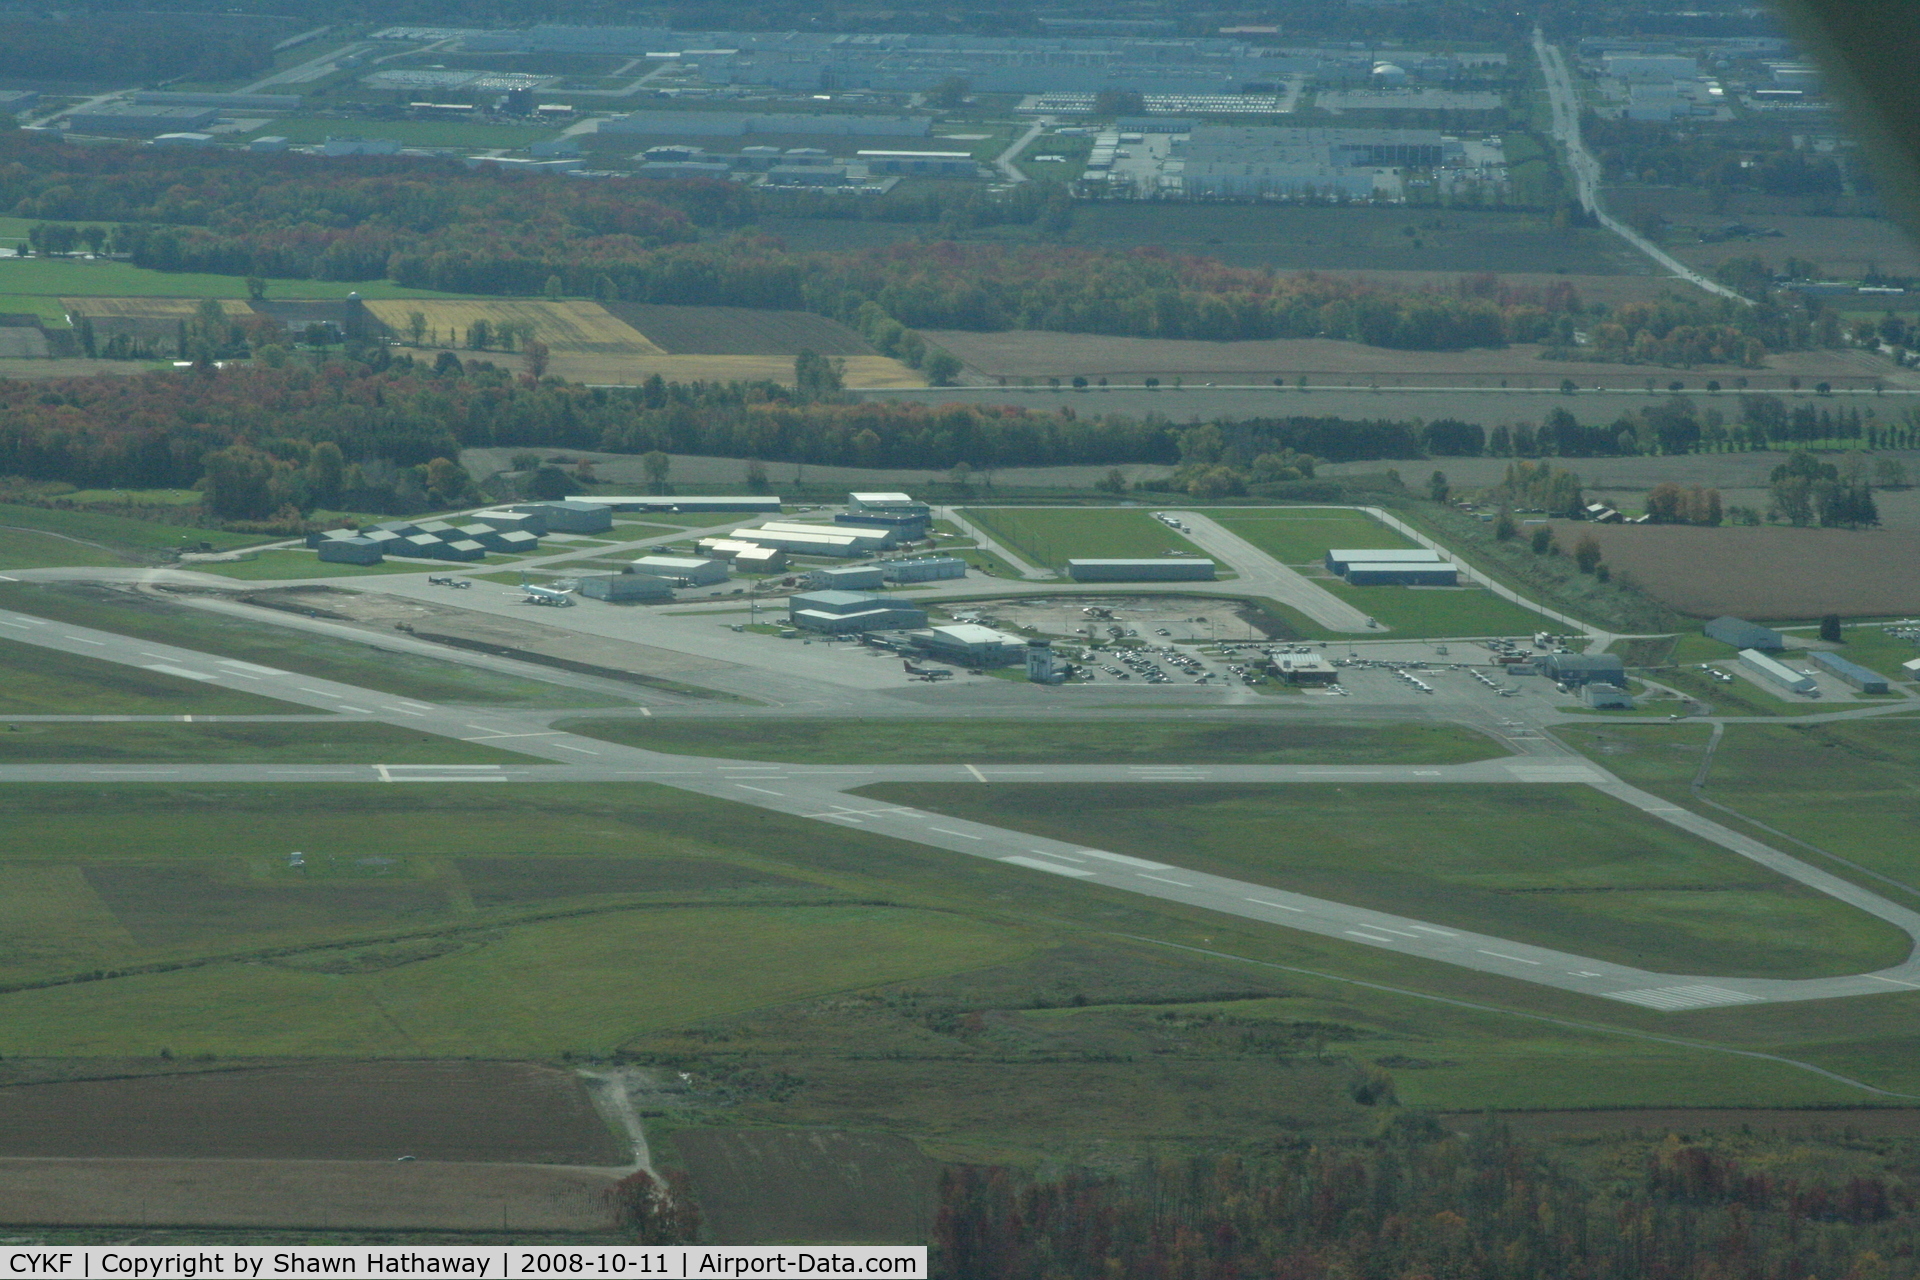 Region of Waterloo International Airport (Kitchener/Waterloo Regional Airport), Regional Municipality of Waterloo, Ontario Canada (CYKF) - The Terminal, and hangers for Waterloo Airport